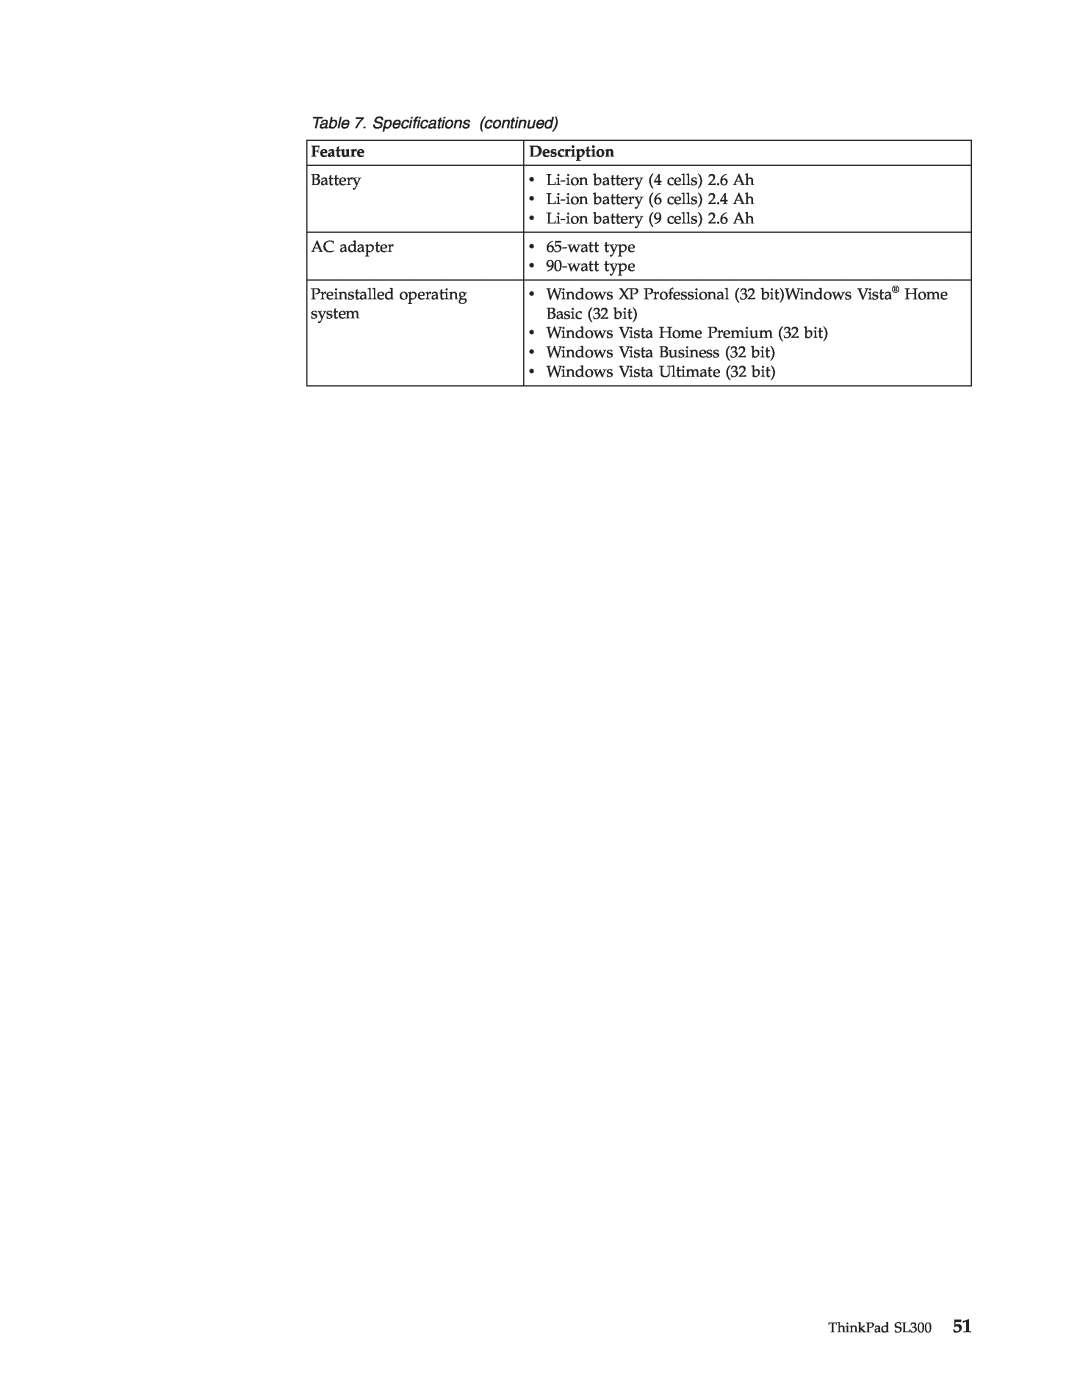 Lenovo manual Specifications, continued, Feature, Description, ThinkPad SL300 